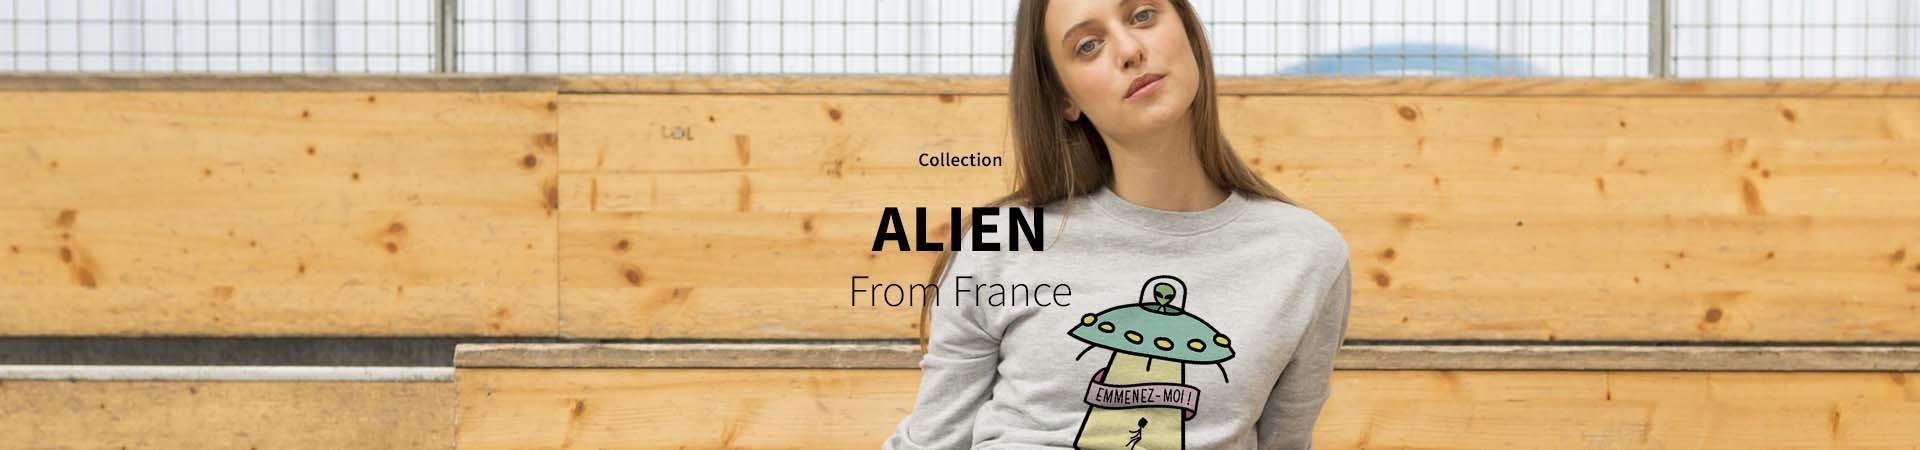 Collection Alien